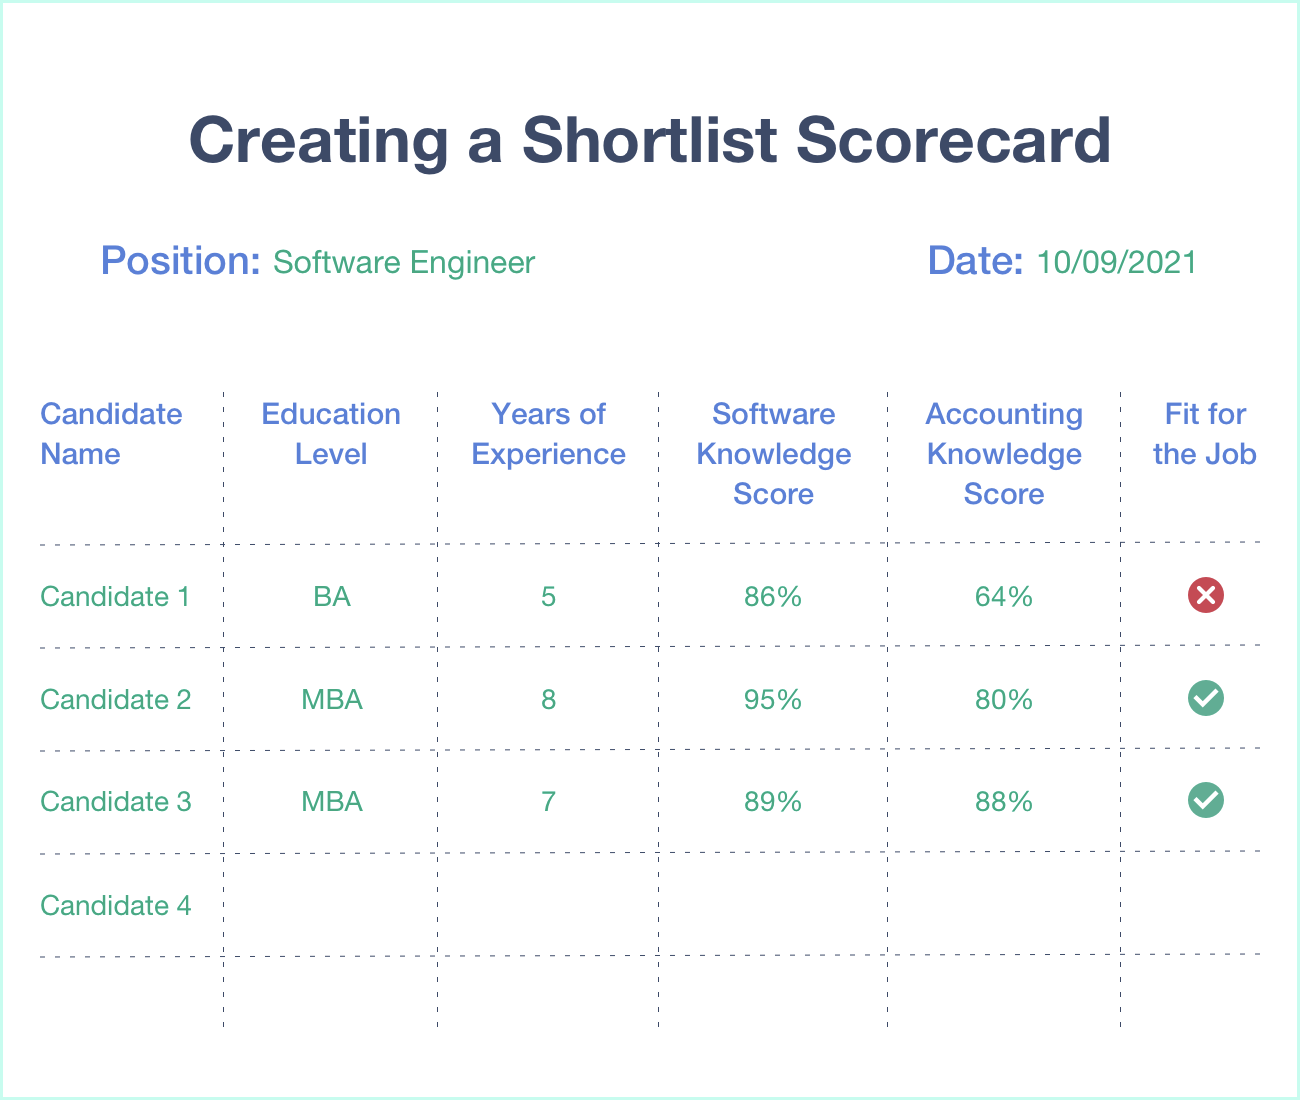 Creating a shortlist scorecard of criteria